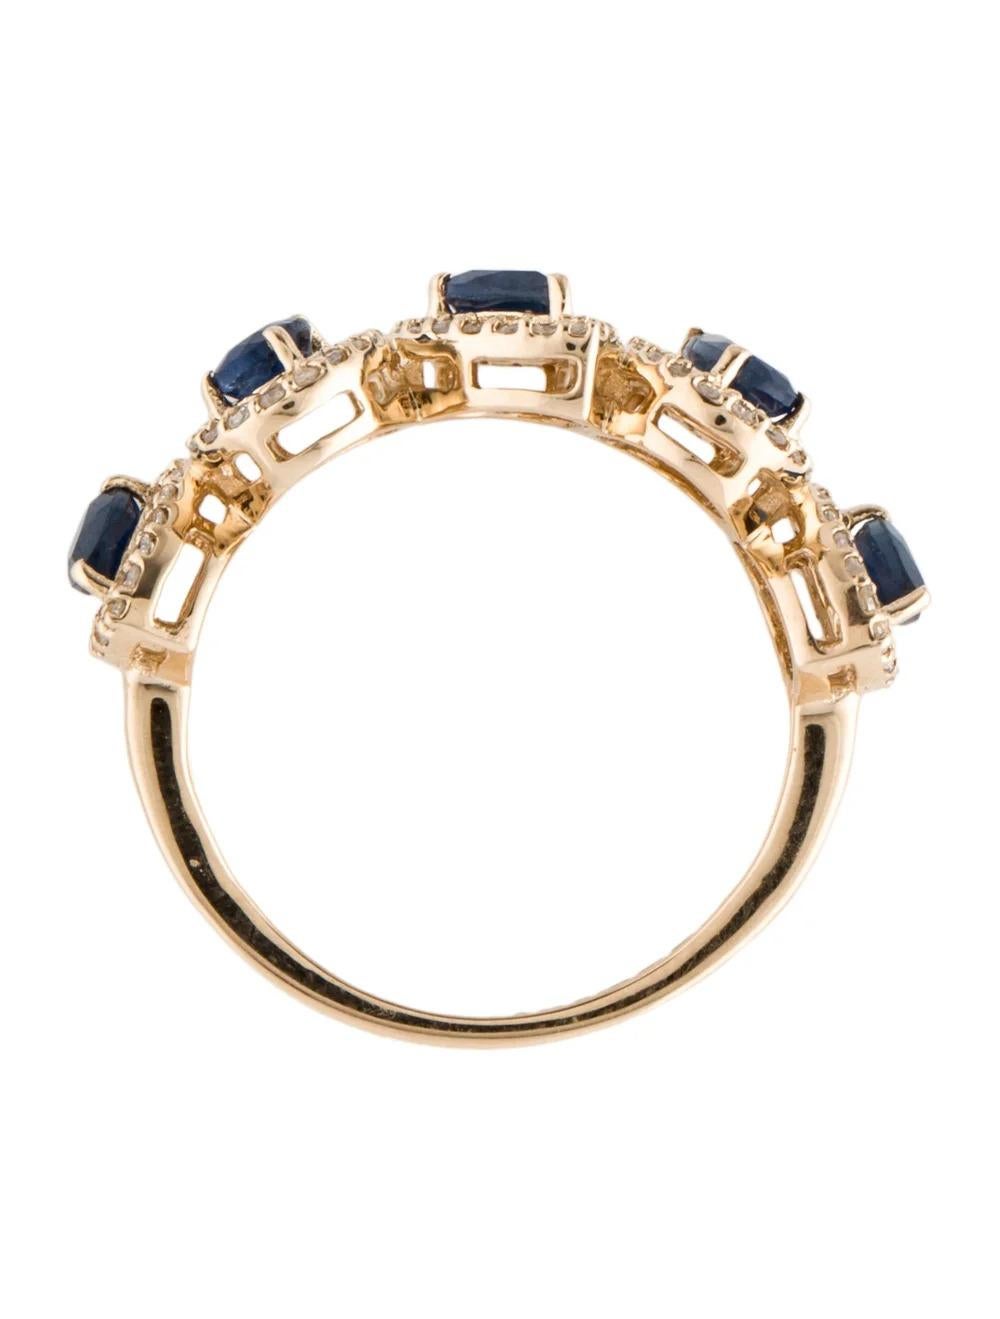 Women's 14K Sapphire Diamond Band Ring Size 8, Vintage Style Blue Gemstone, Fine Jewelry For Sale